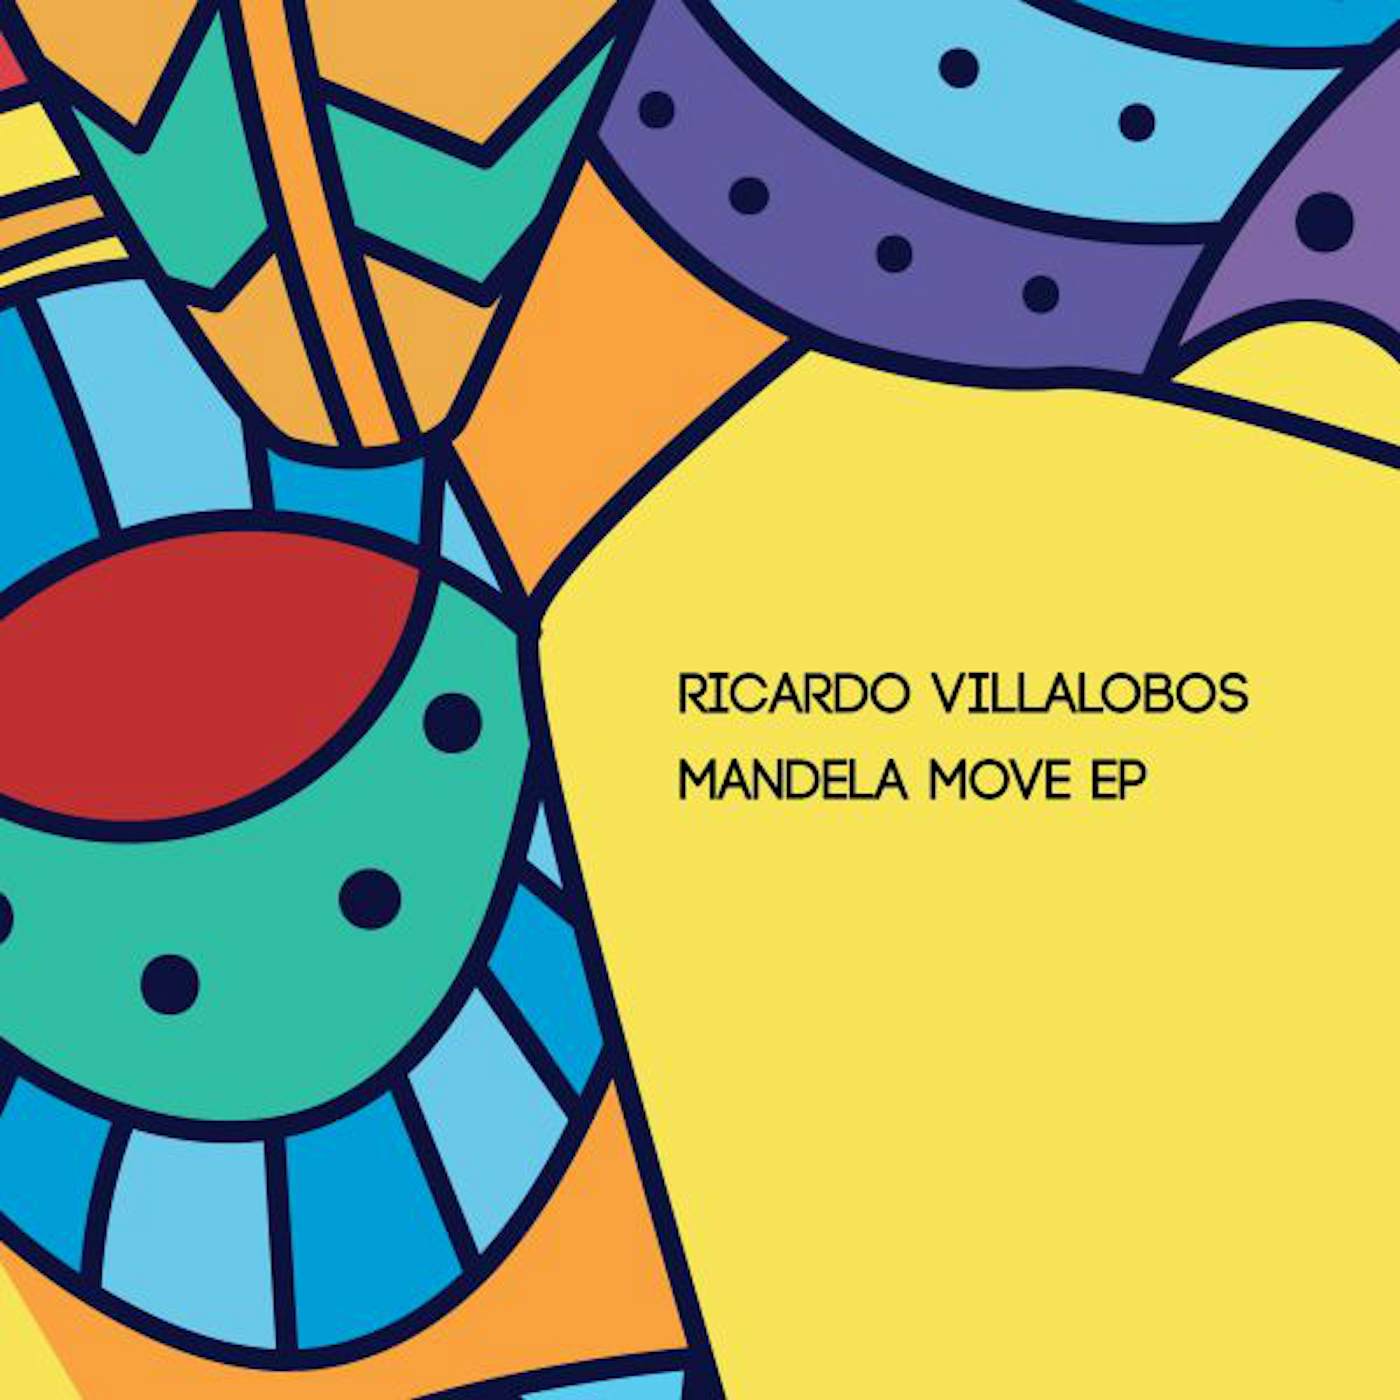 Ricardo Villalobos MANDELA MOVE Vinyl Record